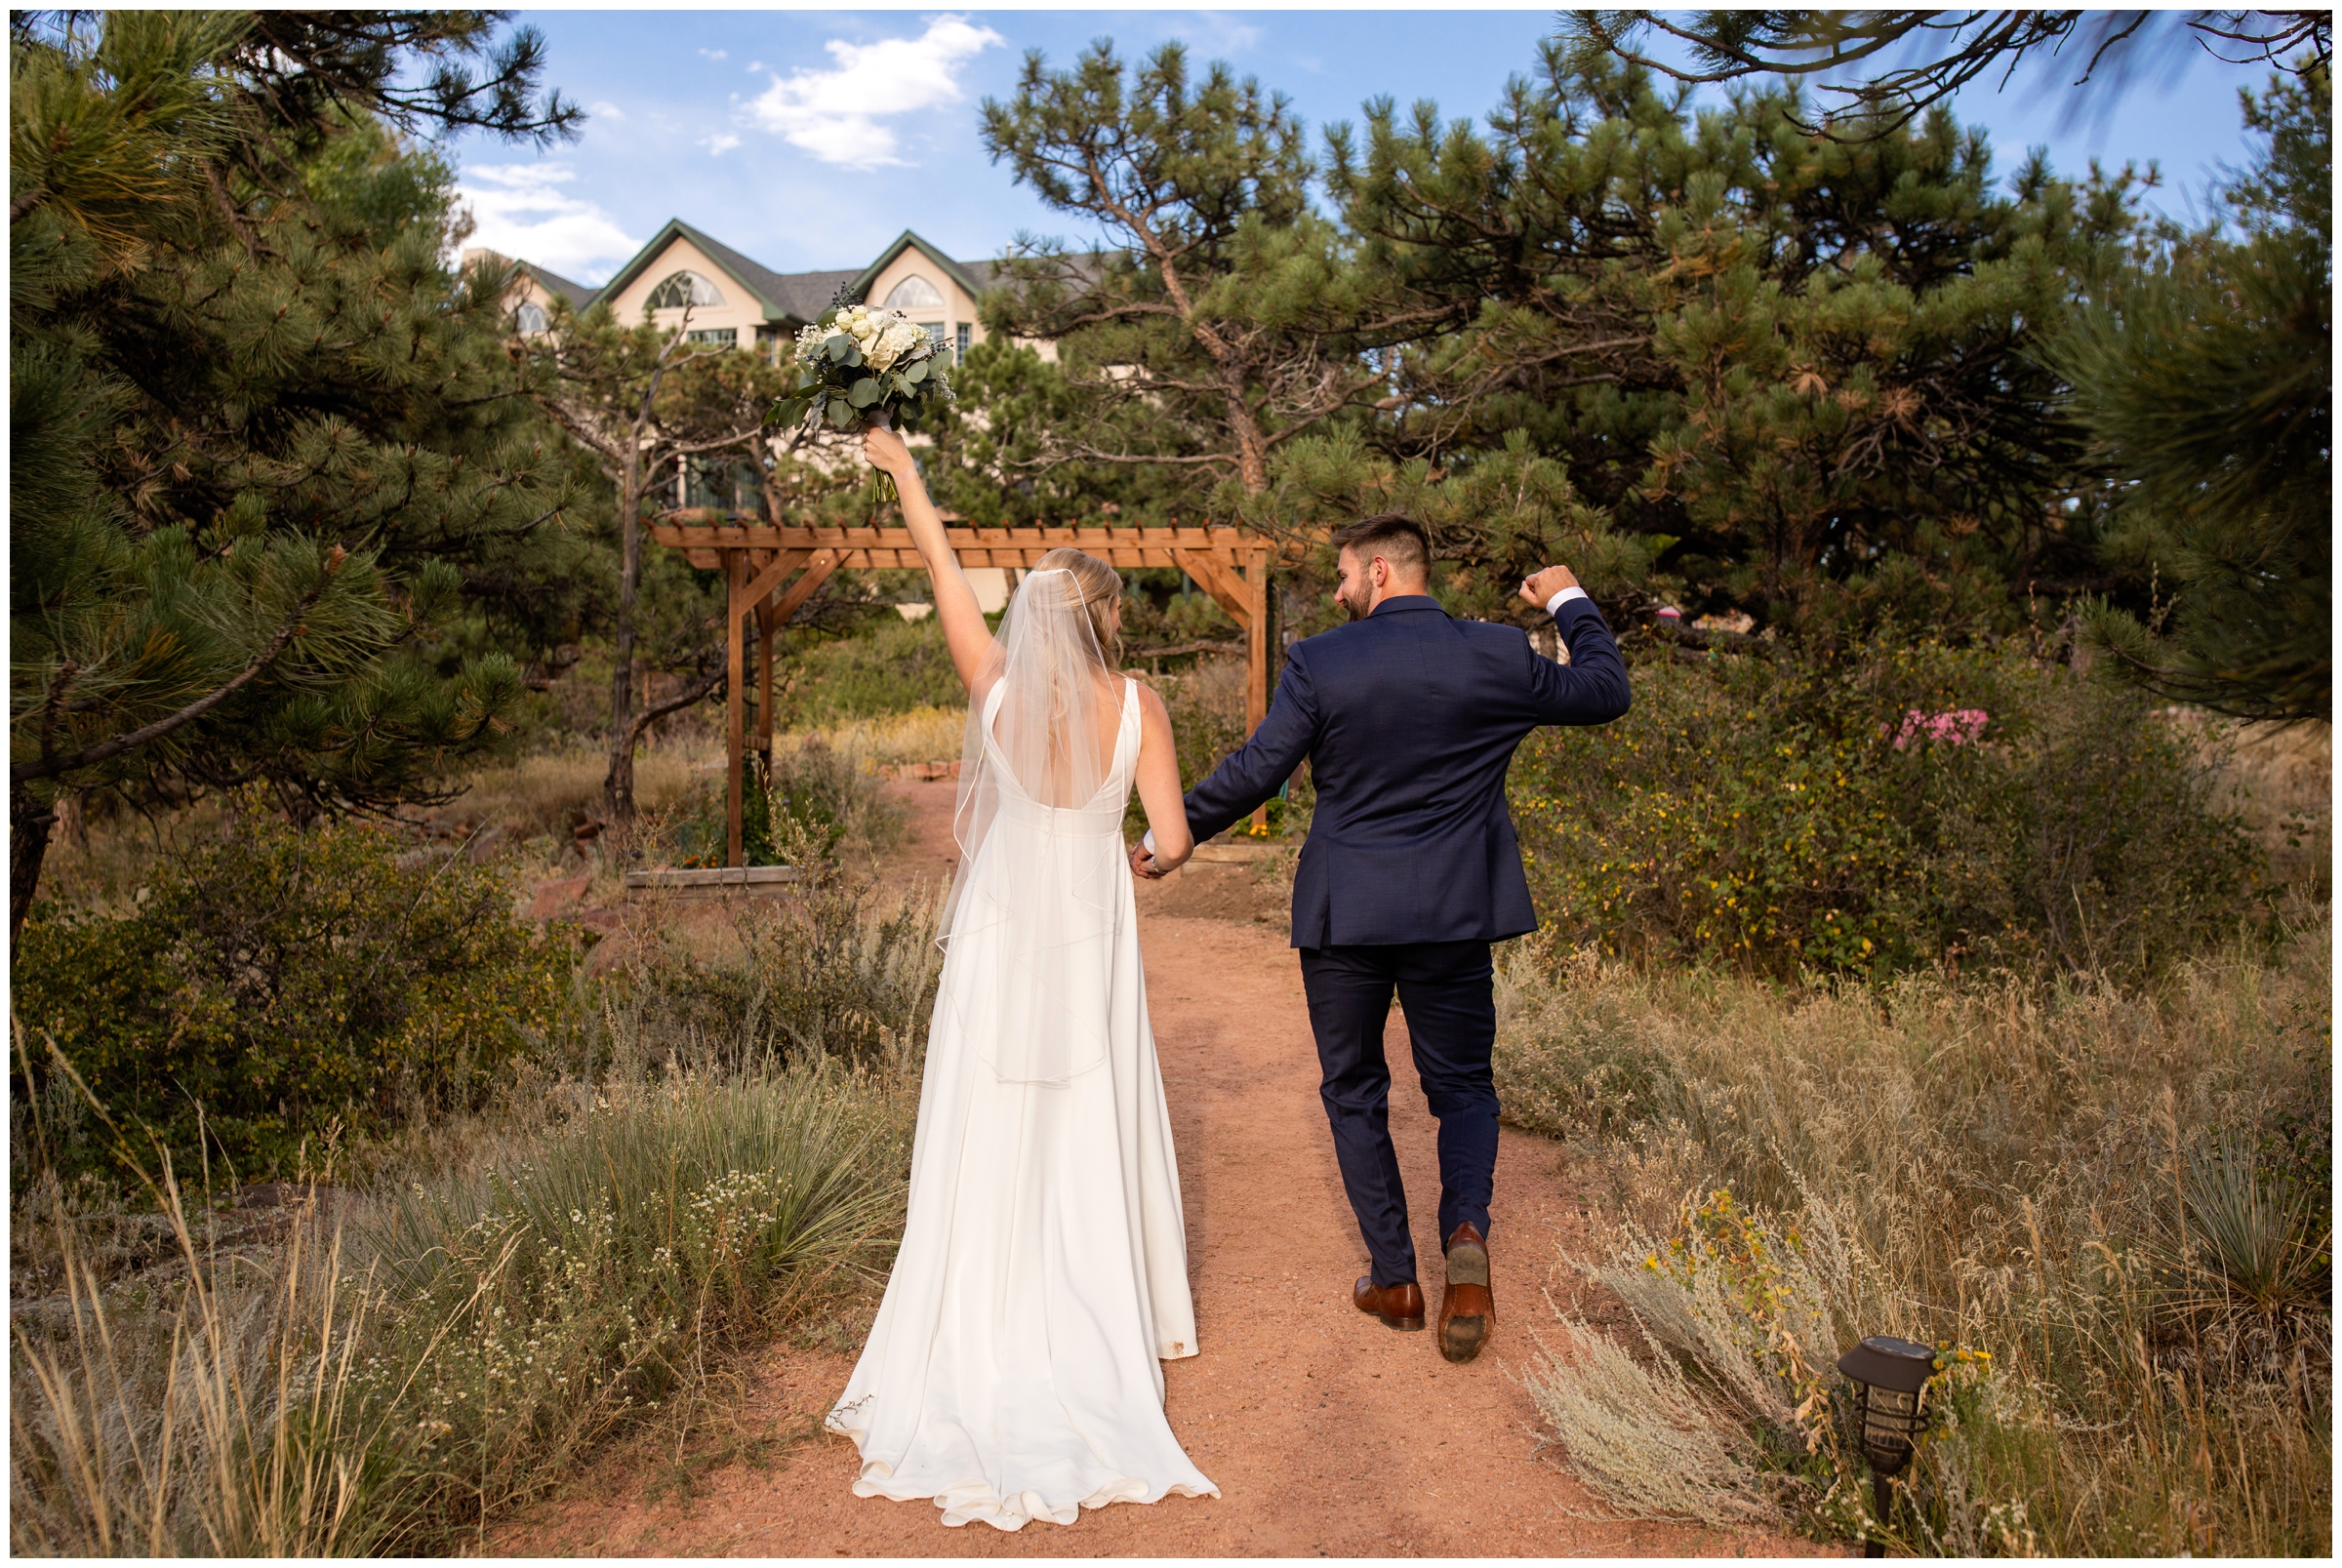 Lionscrest Manor wedding portraits by Colorado photographer Plum Pretty Photography